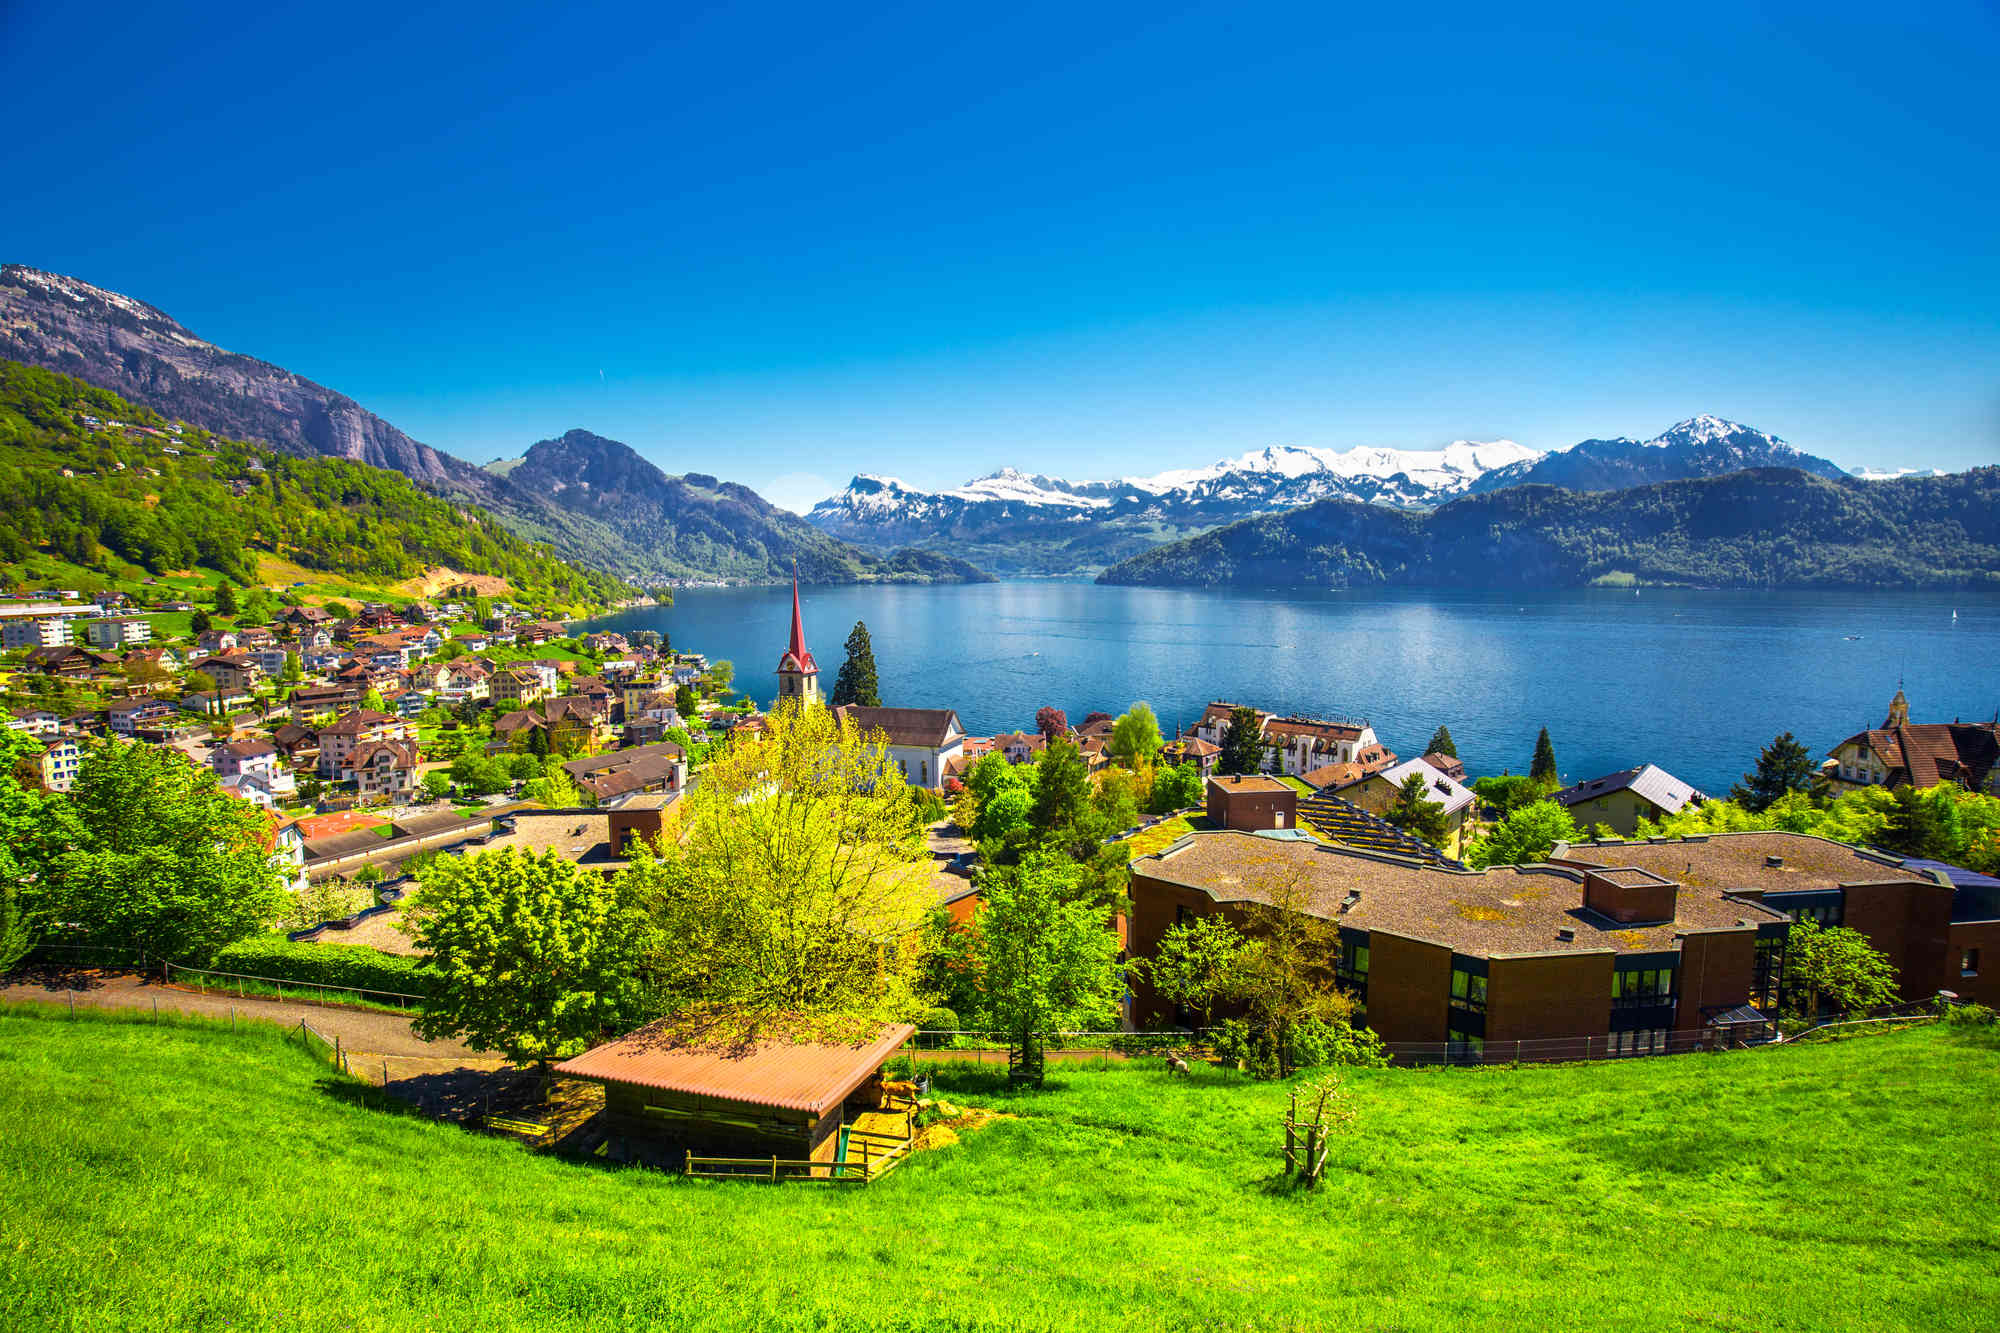 Around Lake Lucerne